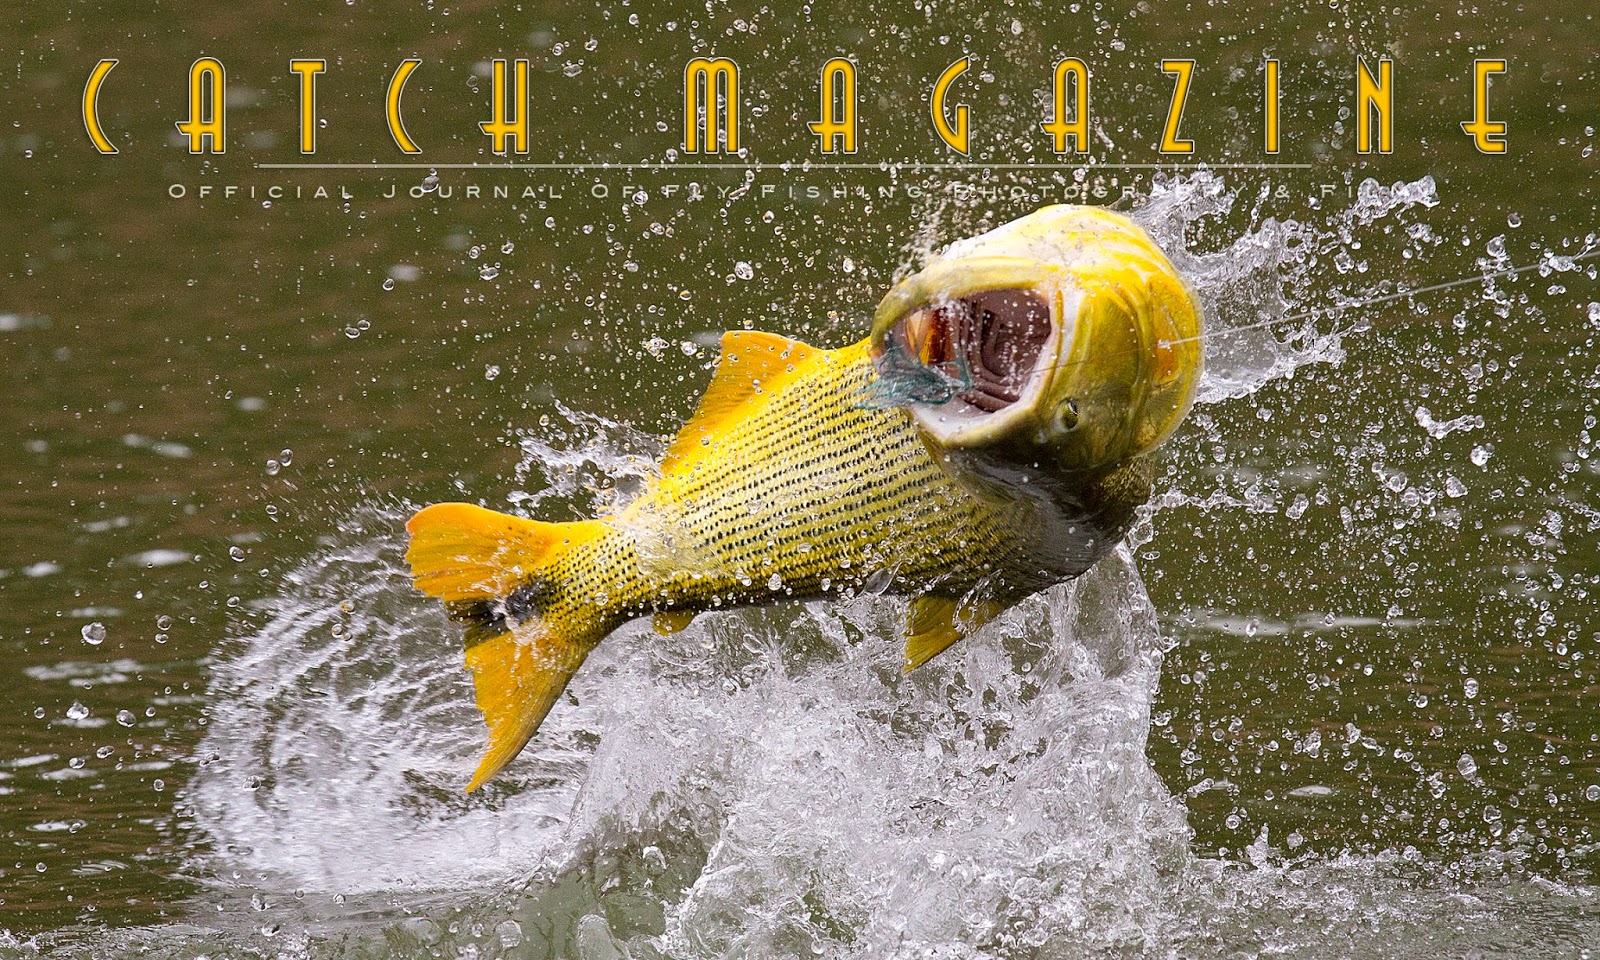  Catch Magazine - Photo/Cover by Jon Covich